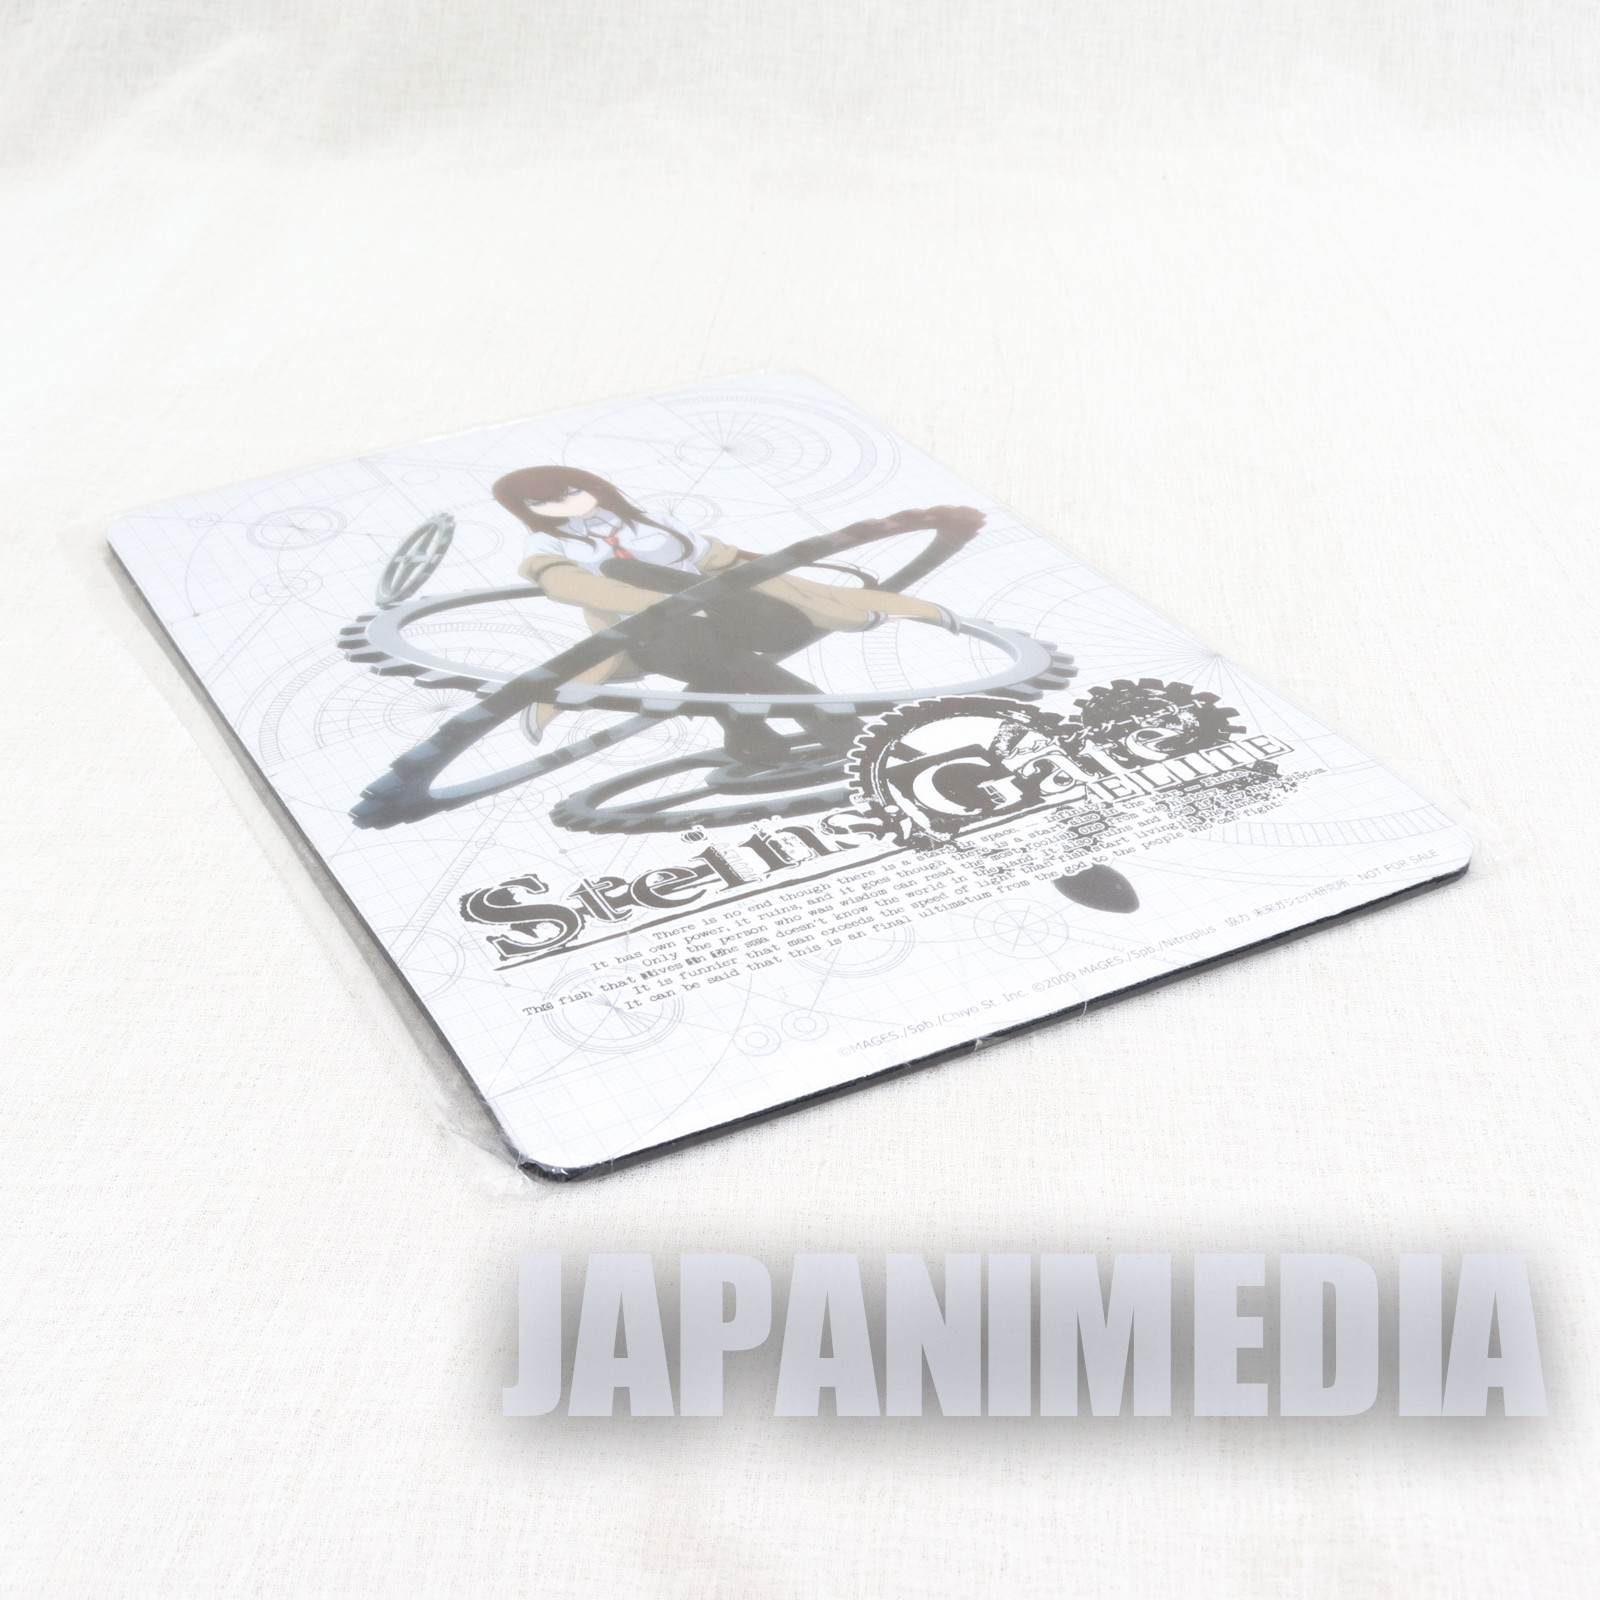 Steins ; Gate Elite Kurisu Makise Mouse Pad JAPAN ANIME MANGA